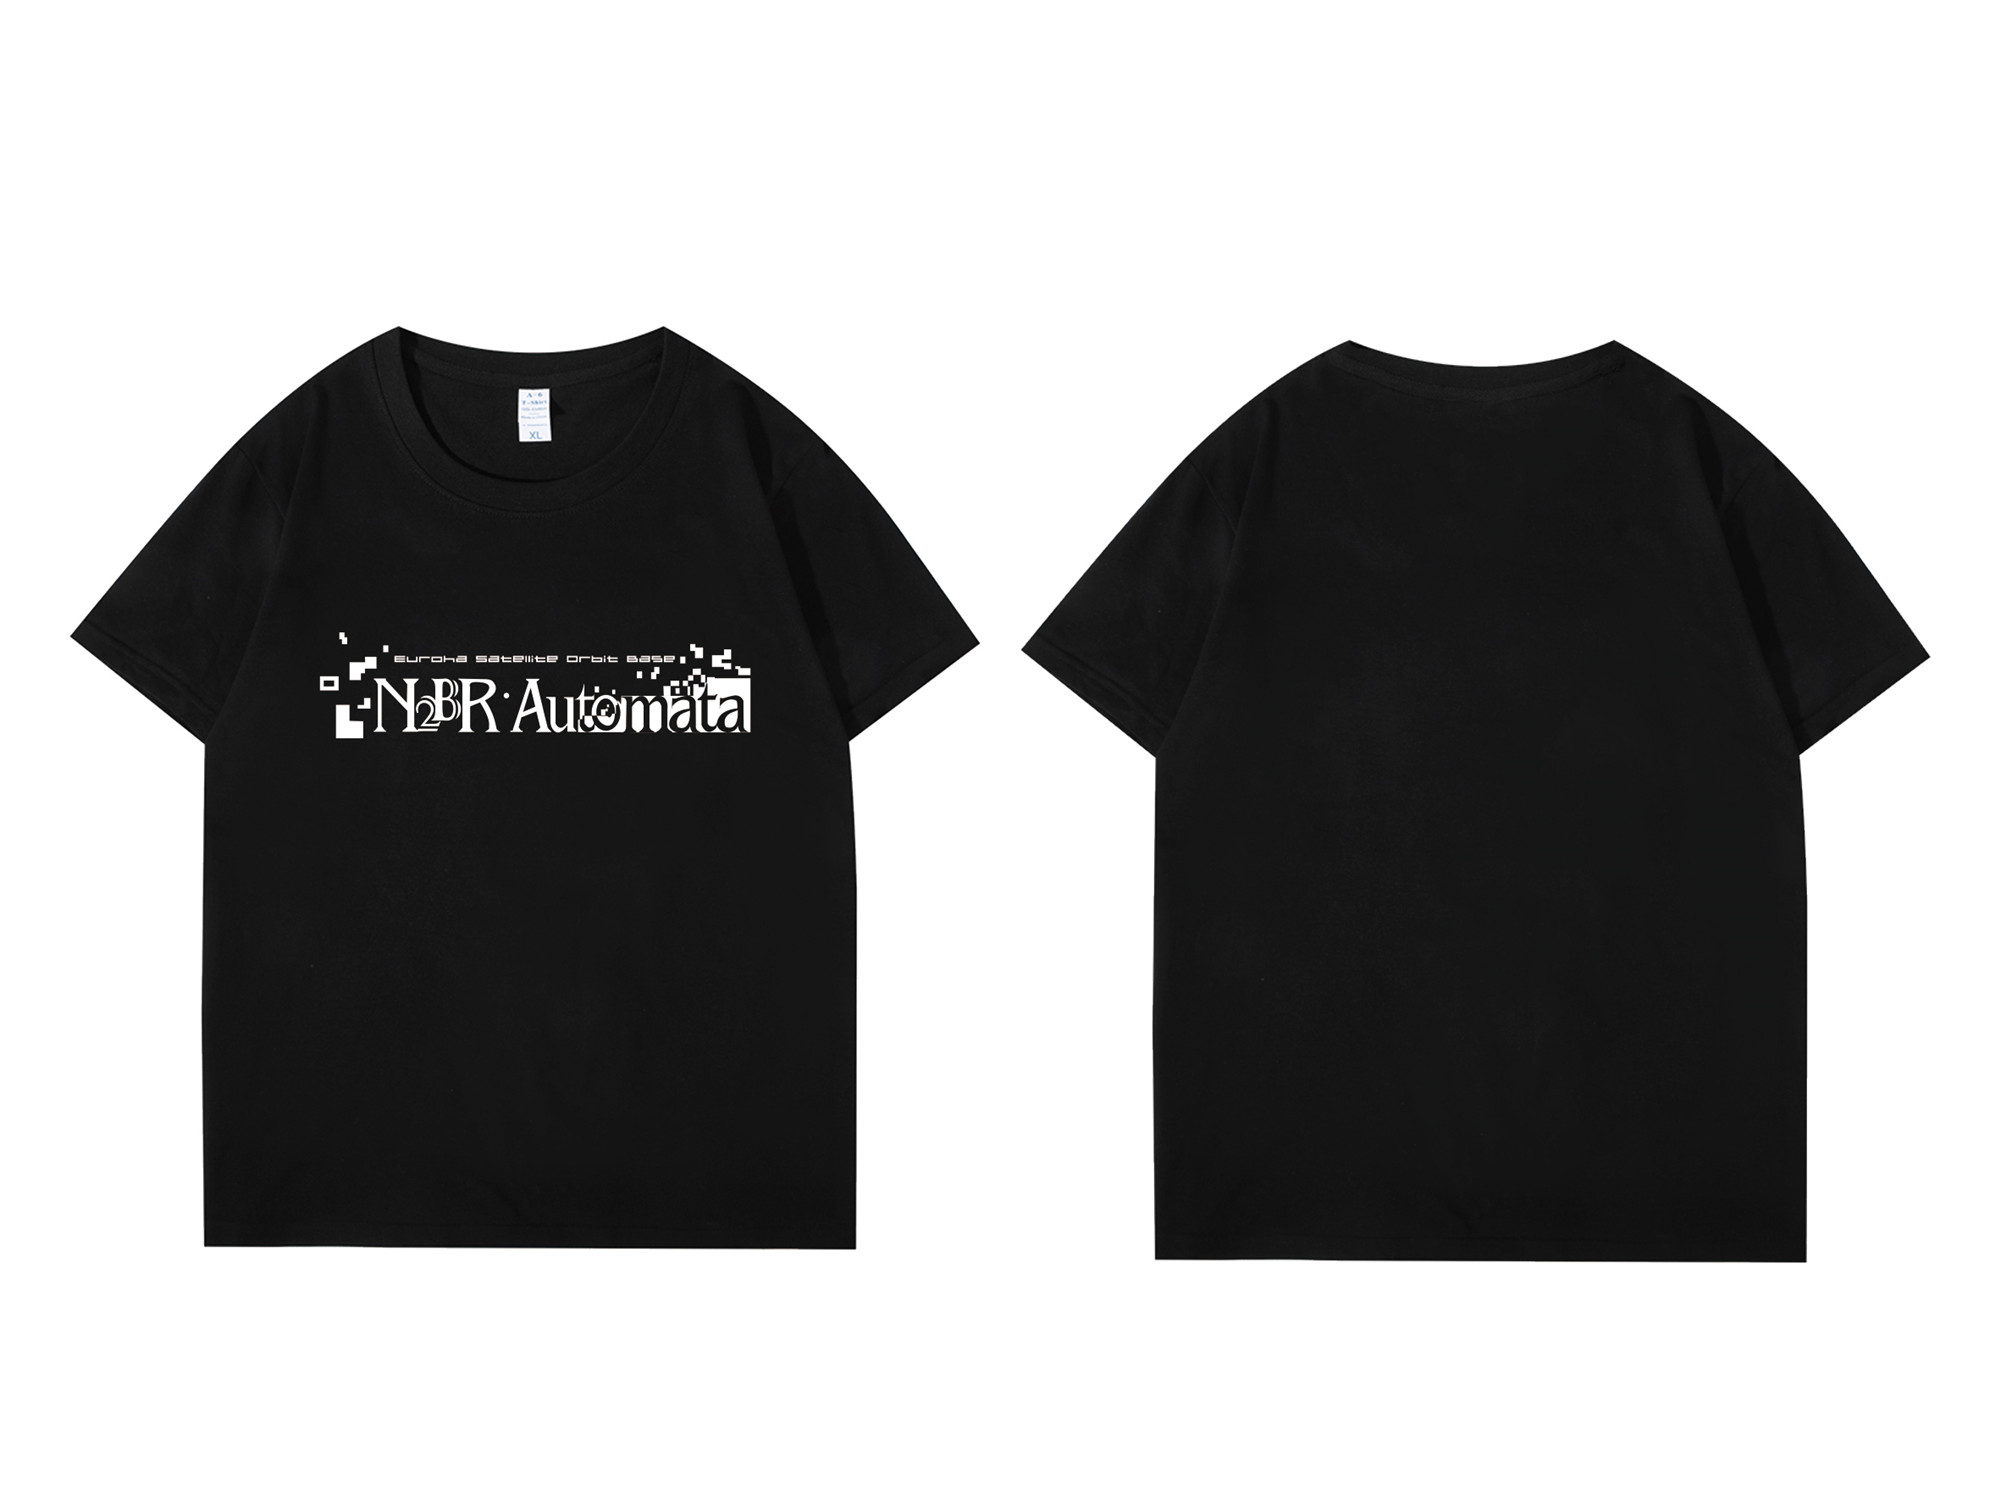 Nier Automata Unisex Anime Mens/Womens Short Sleeve T-shirts Fashion Printed Tops Cosplay Costume